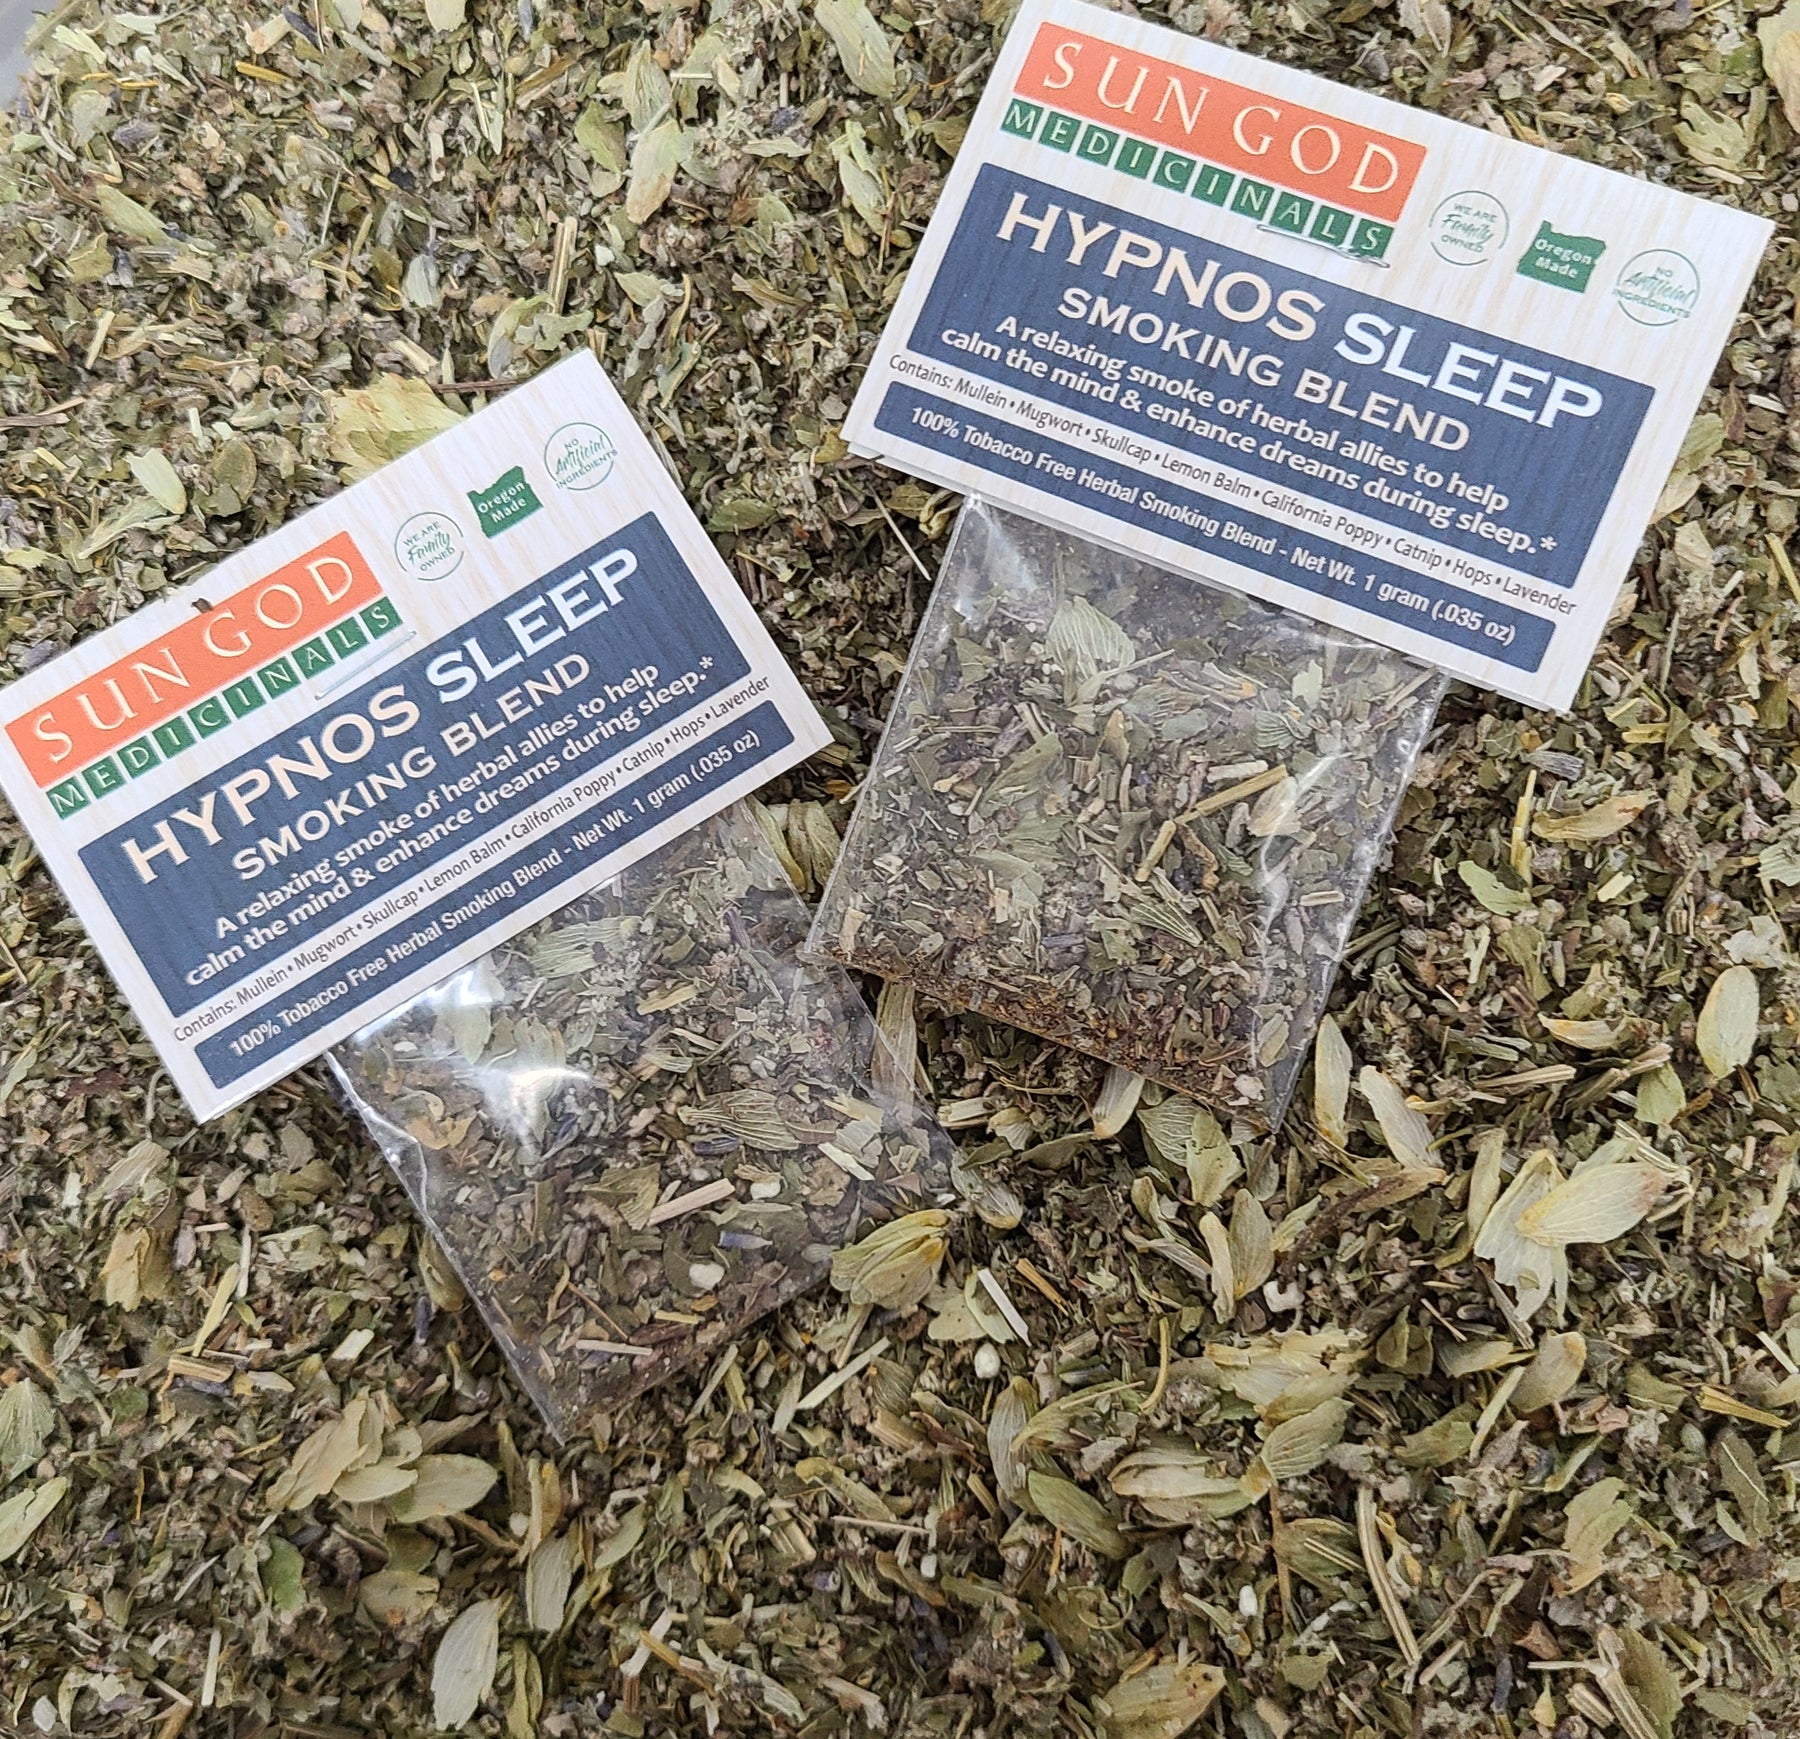 Organic Smoking Herbs, Sun & Rayne